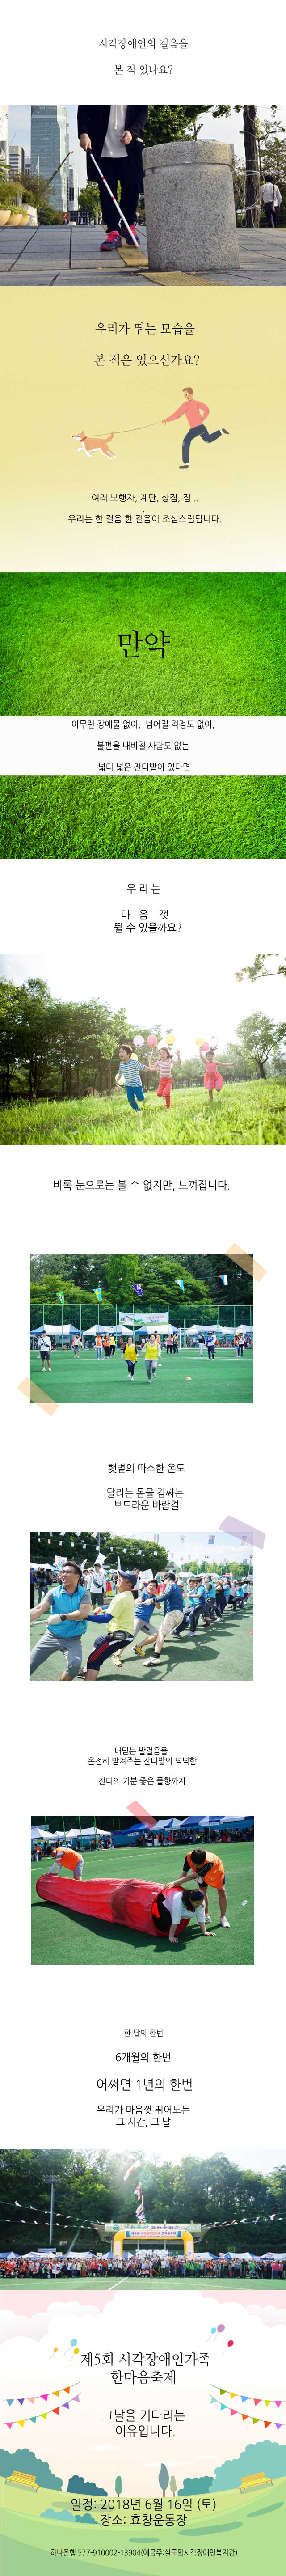 vol. 279 제5회 한마음축제 개최 예정 썸네일